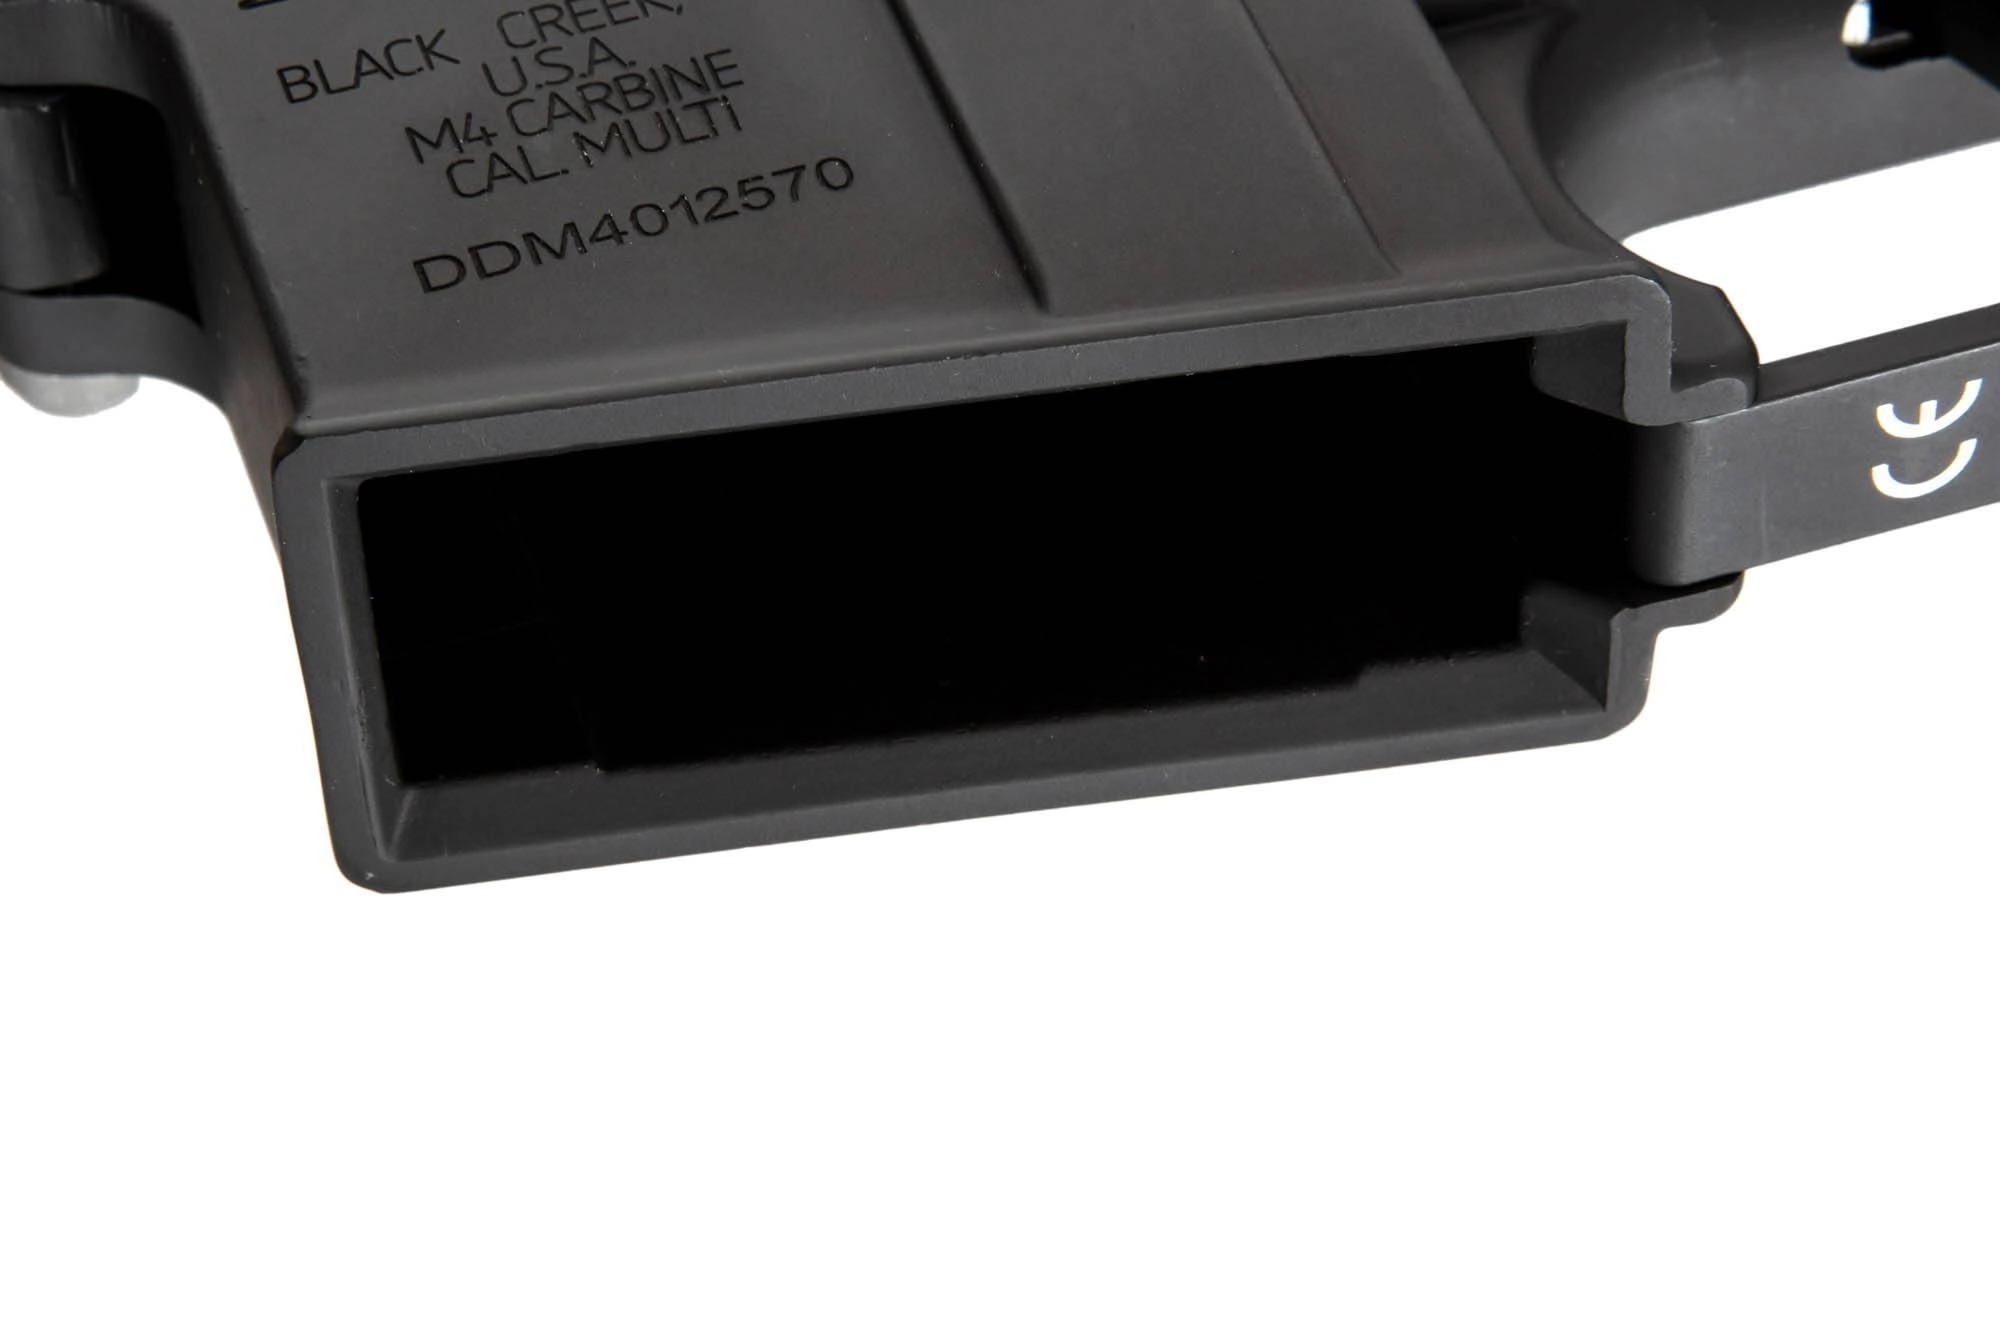 Specna Arms Daniel Defense MK18 SA-E19 EDGE - musta/hiekka